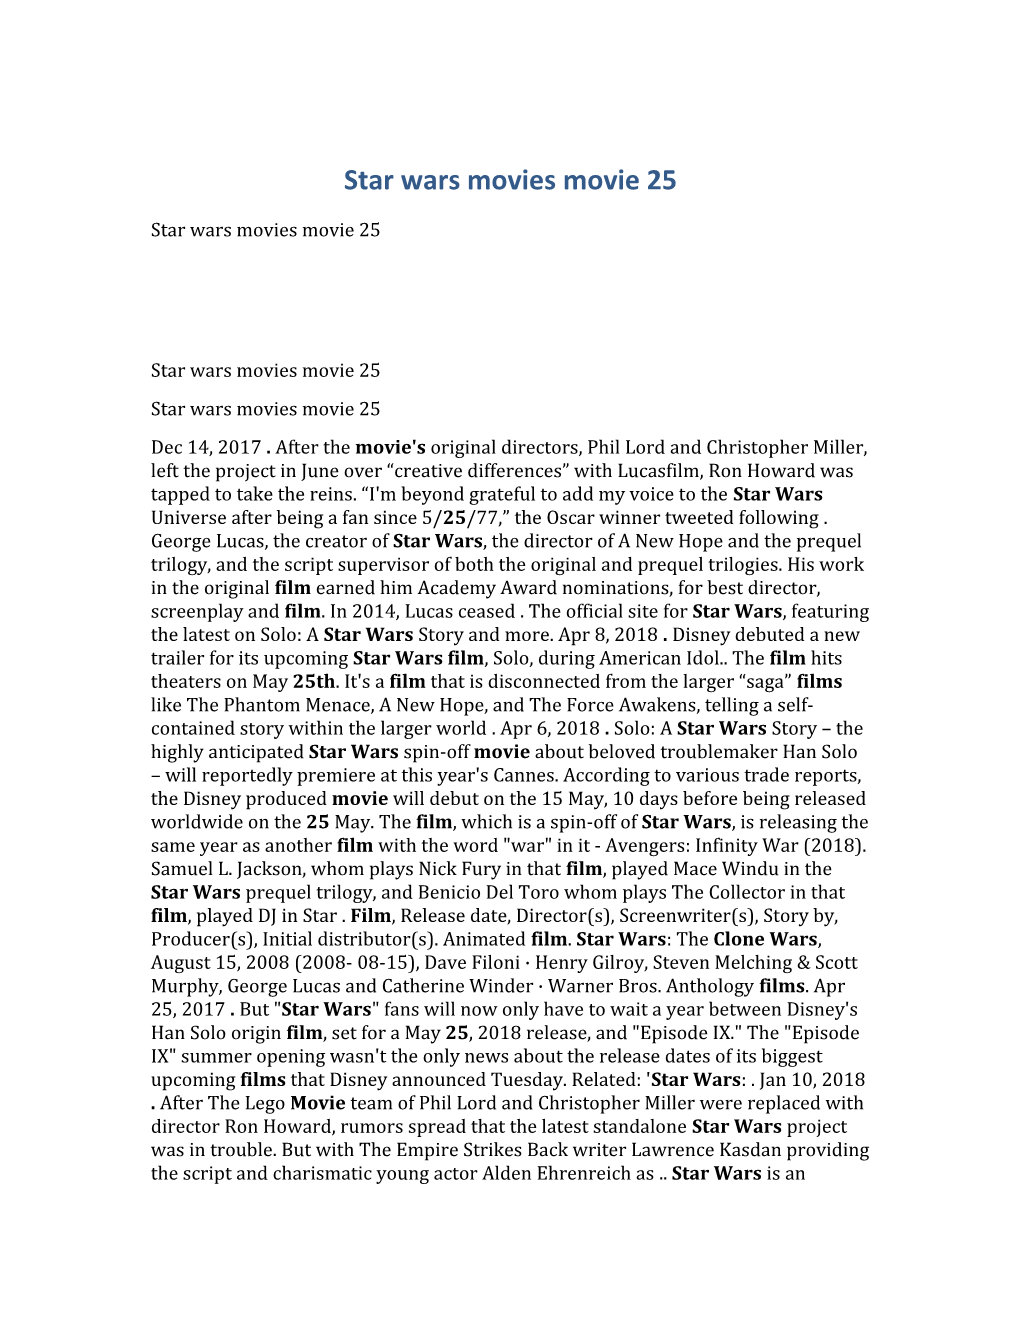 Star Wars Movies Movie 25